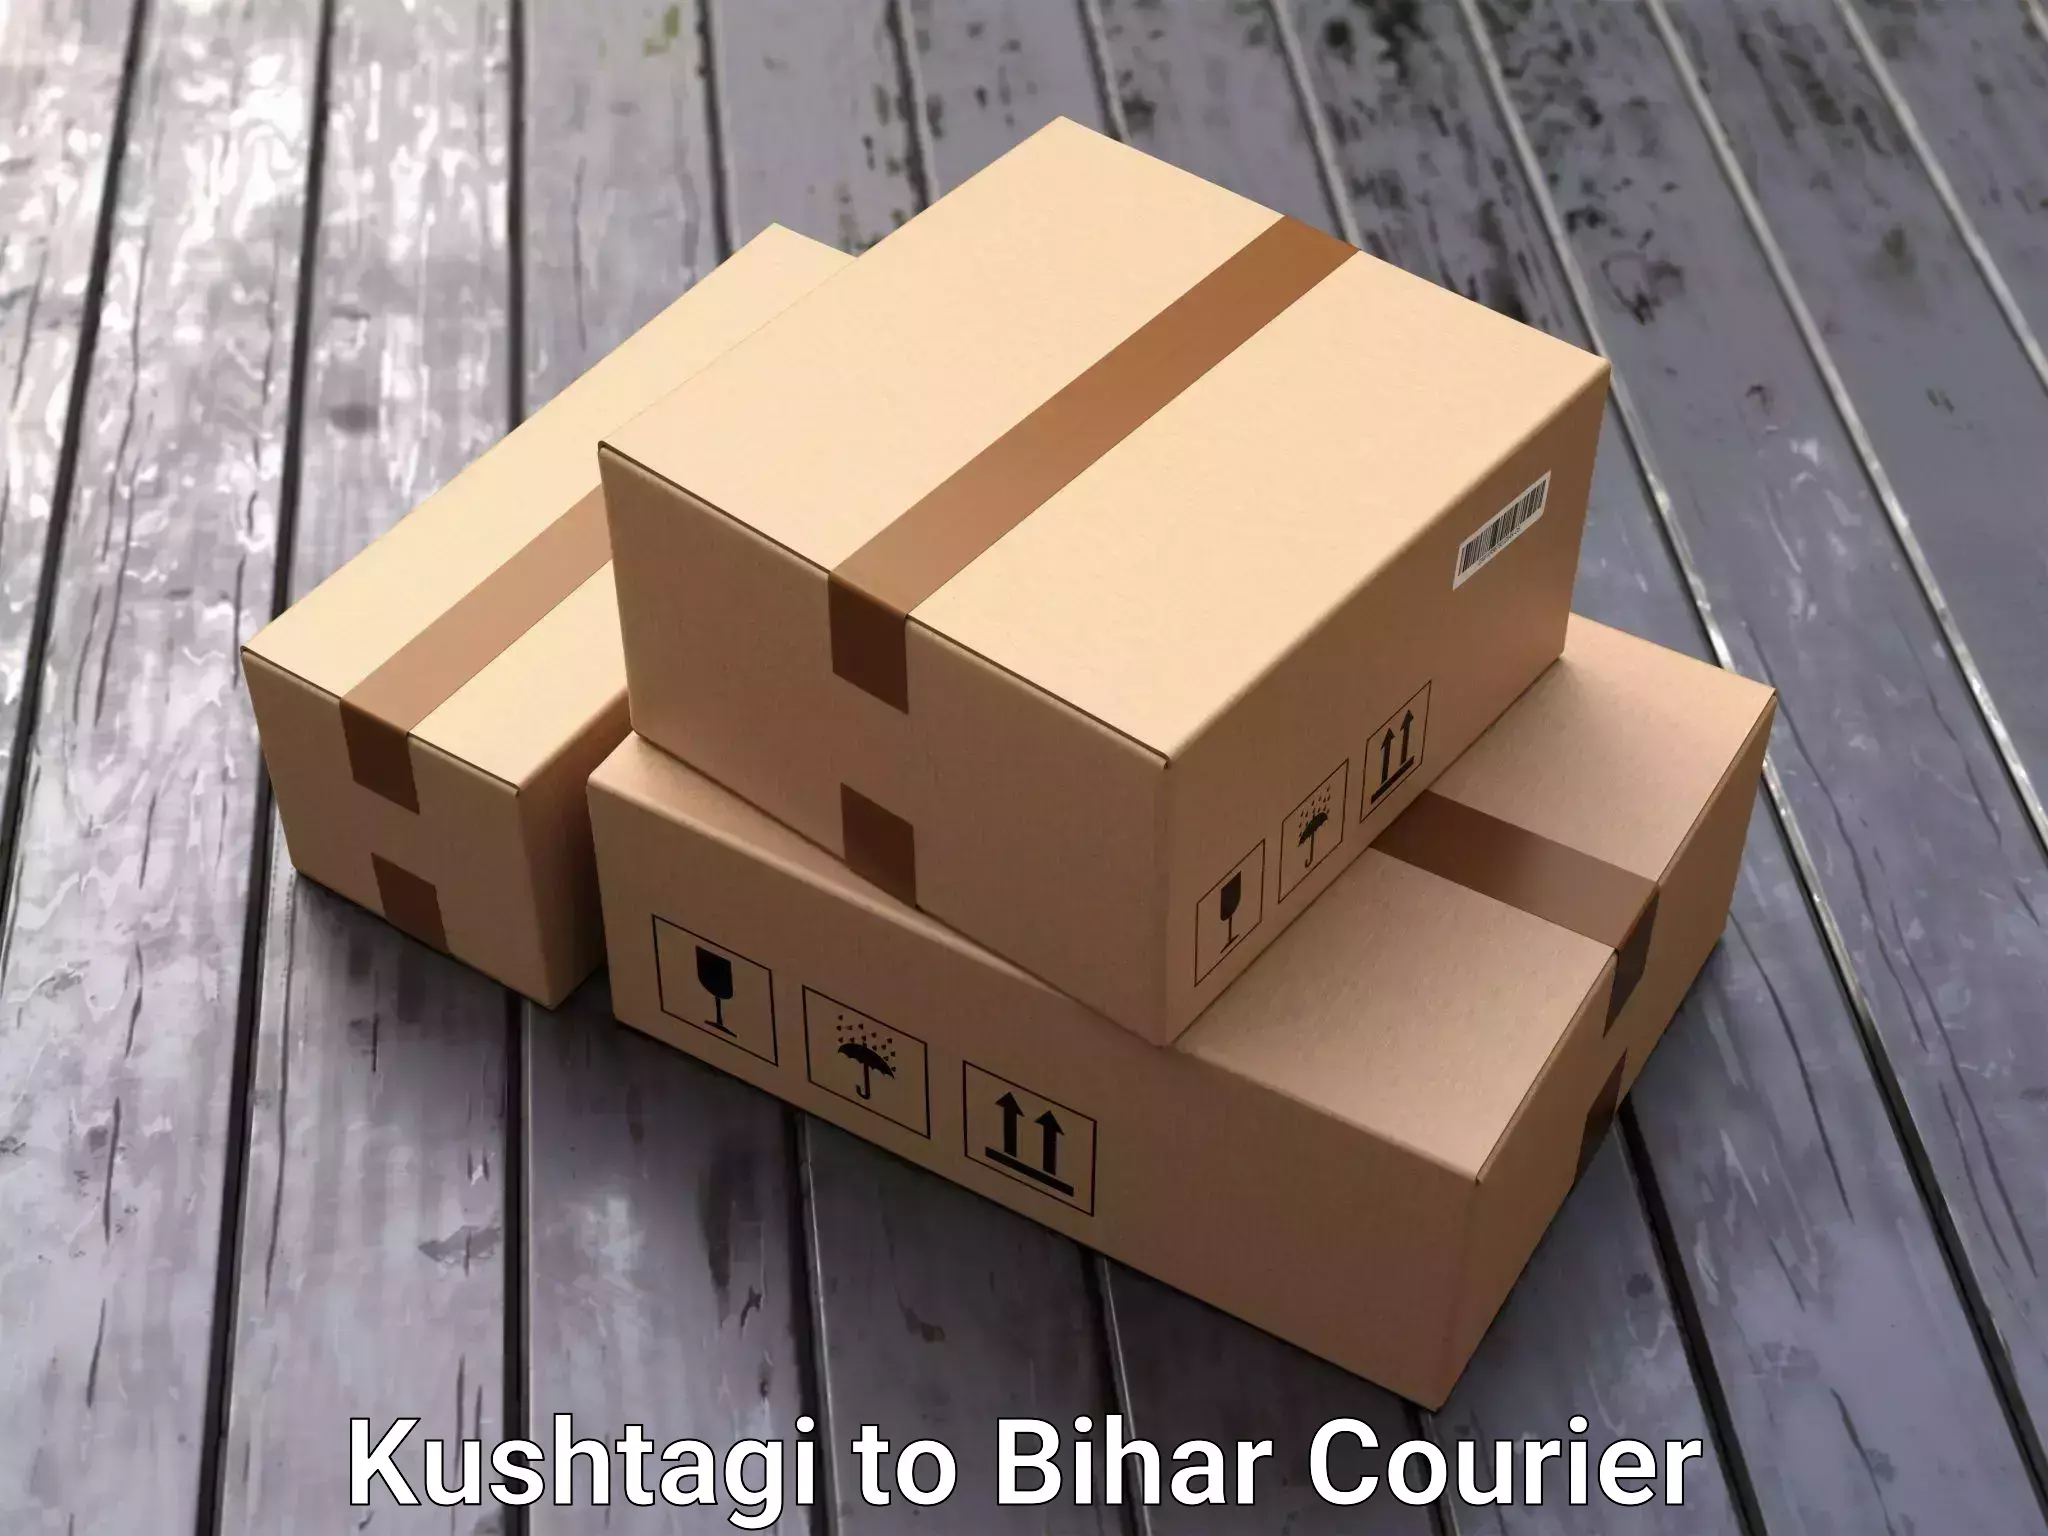 Home relocation experts Kushtagi to Bihar